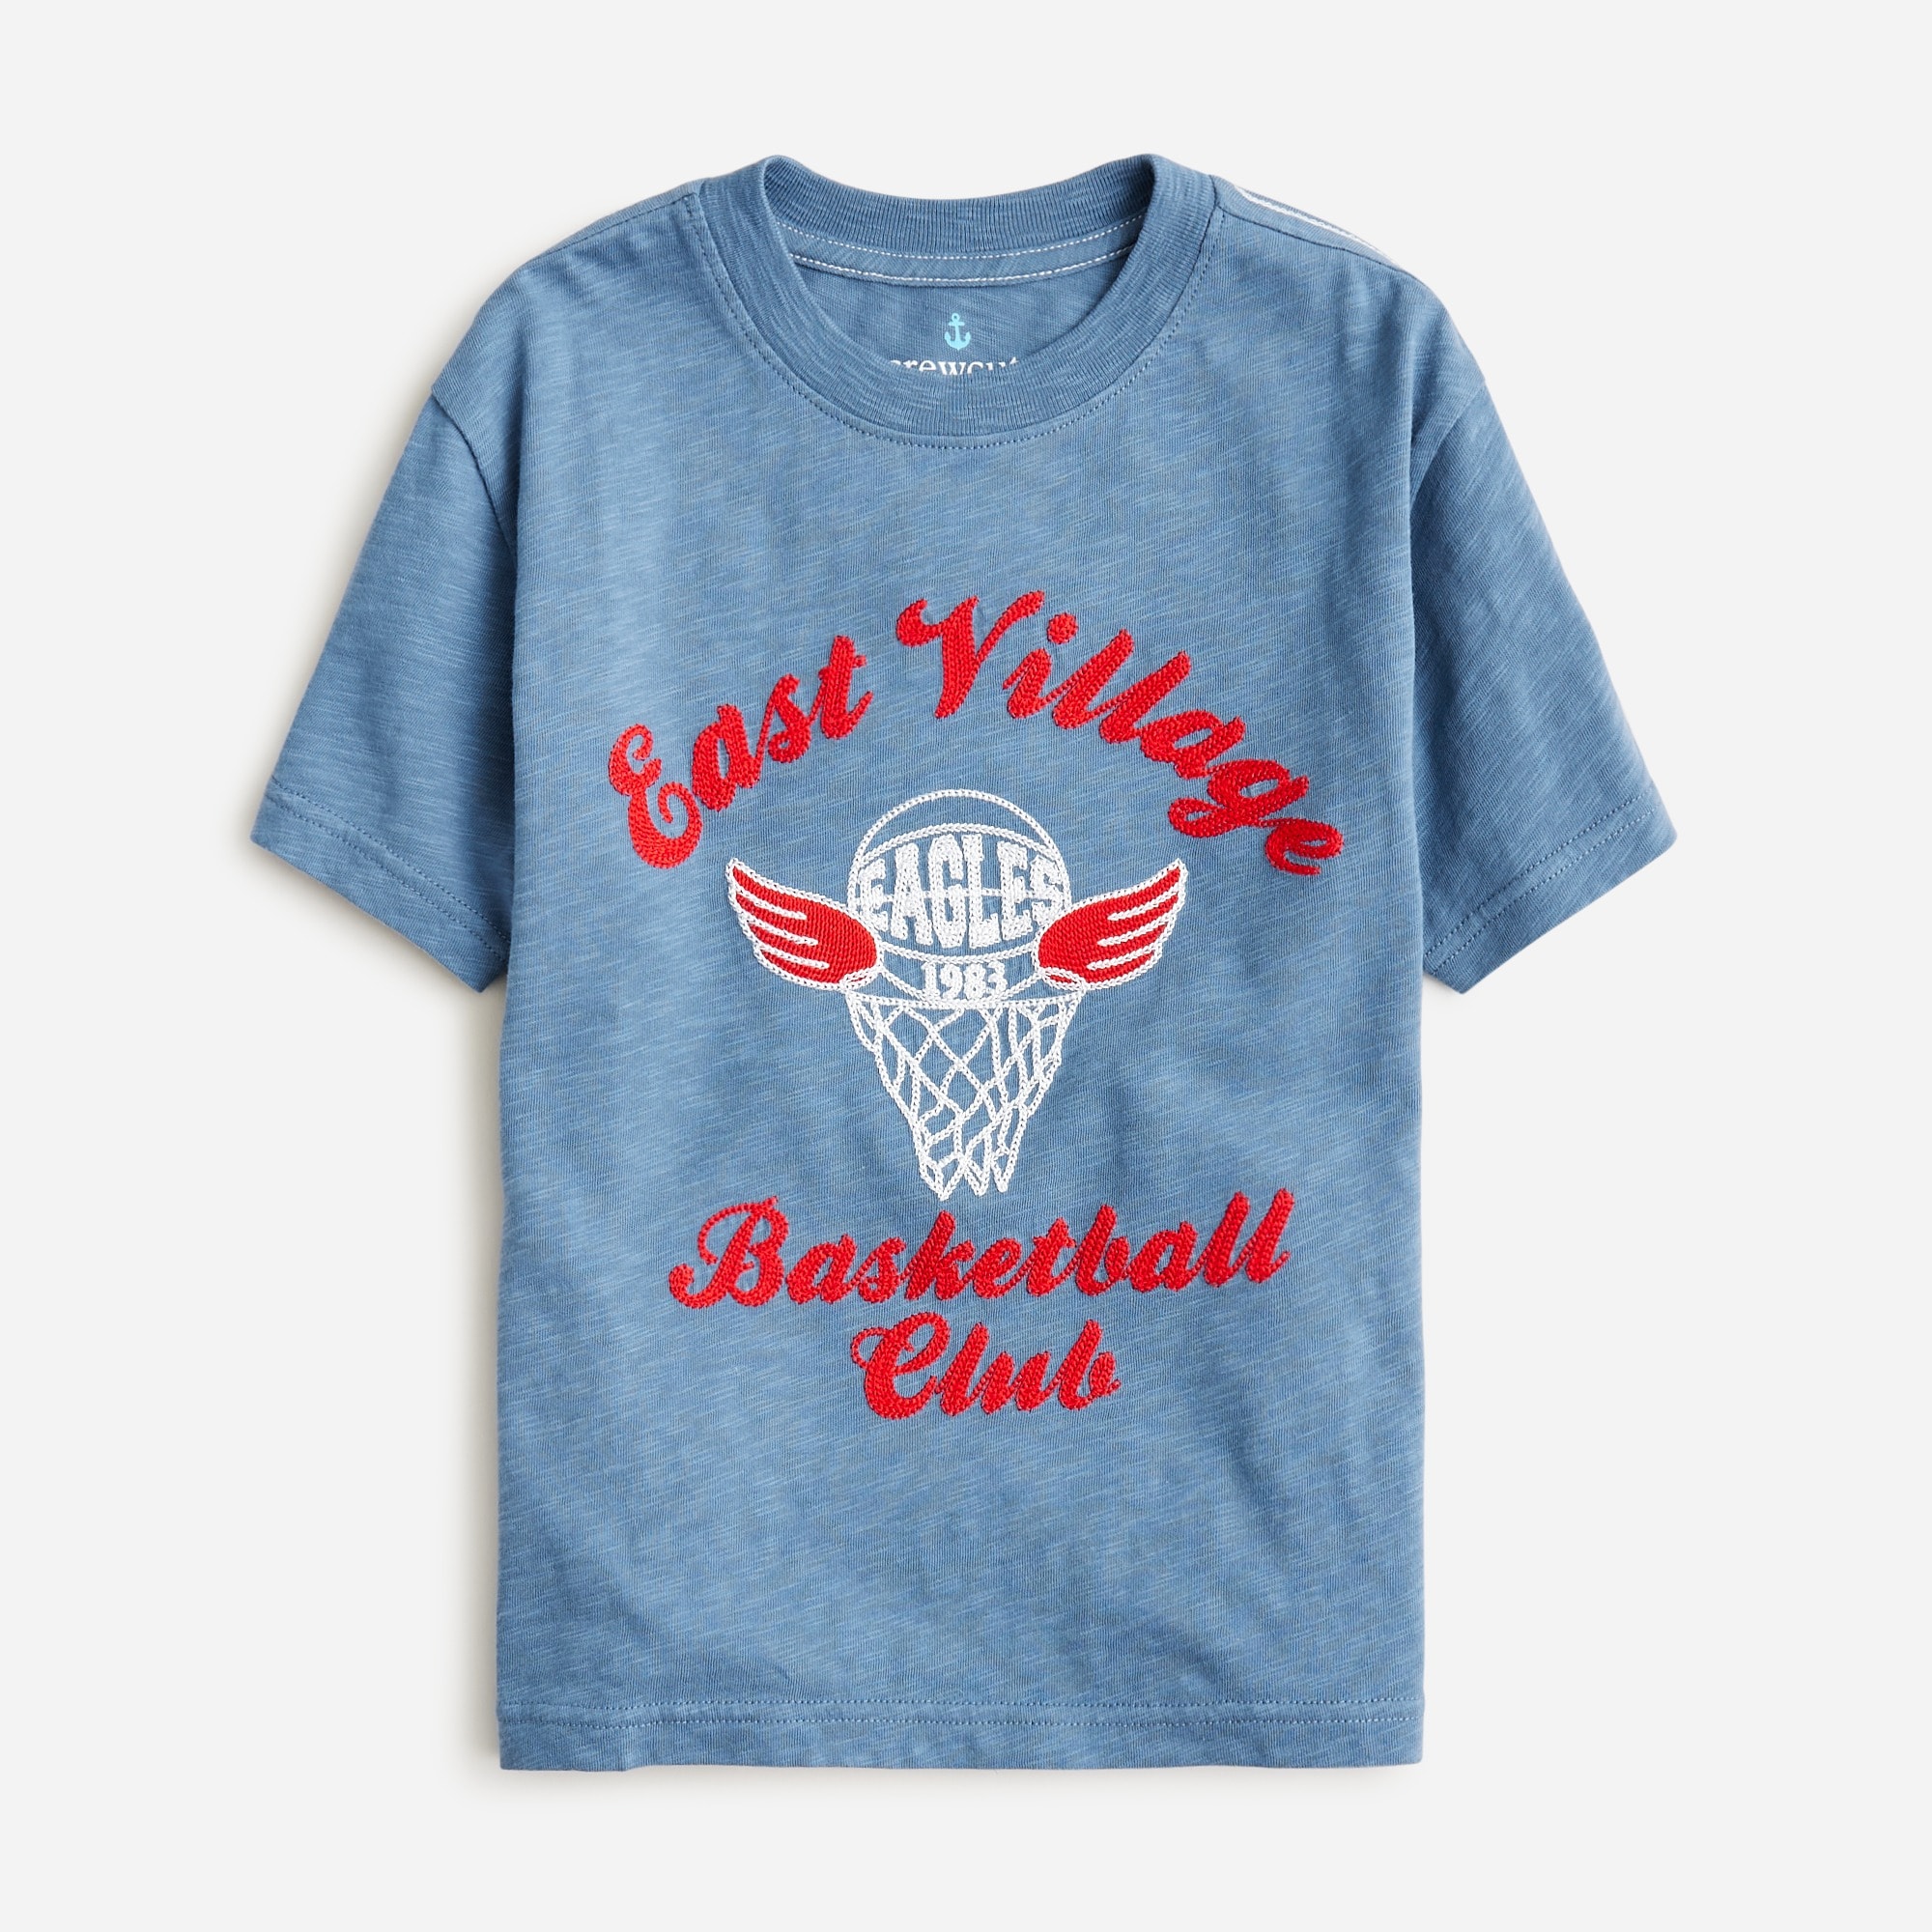  Kids' East Village basketball club graphic T-shirt